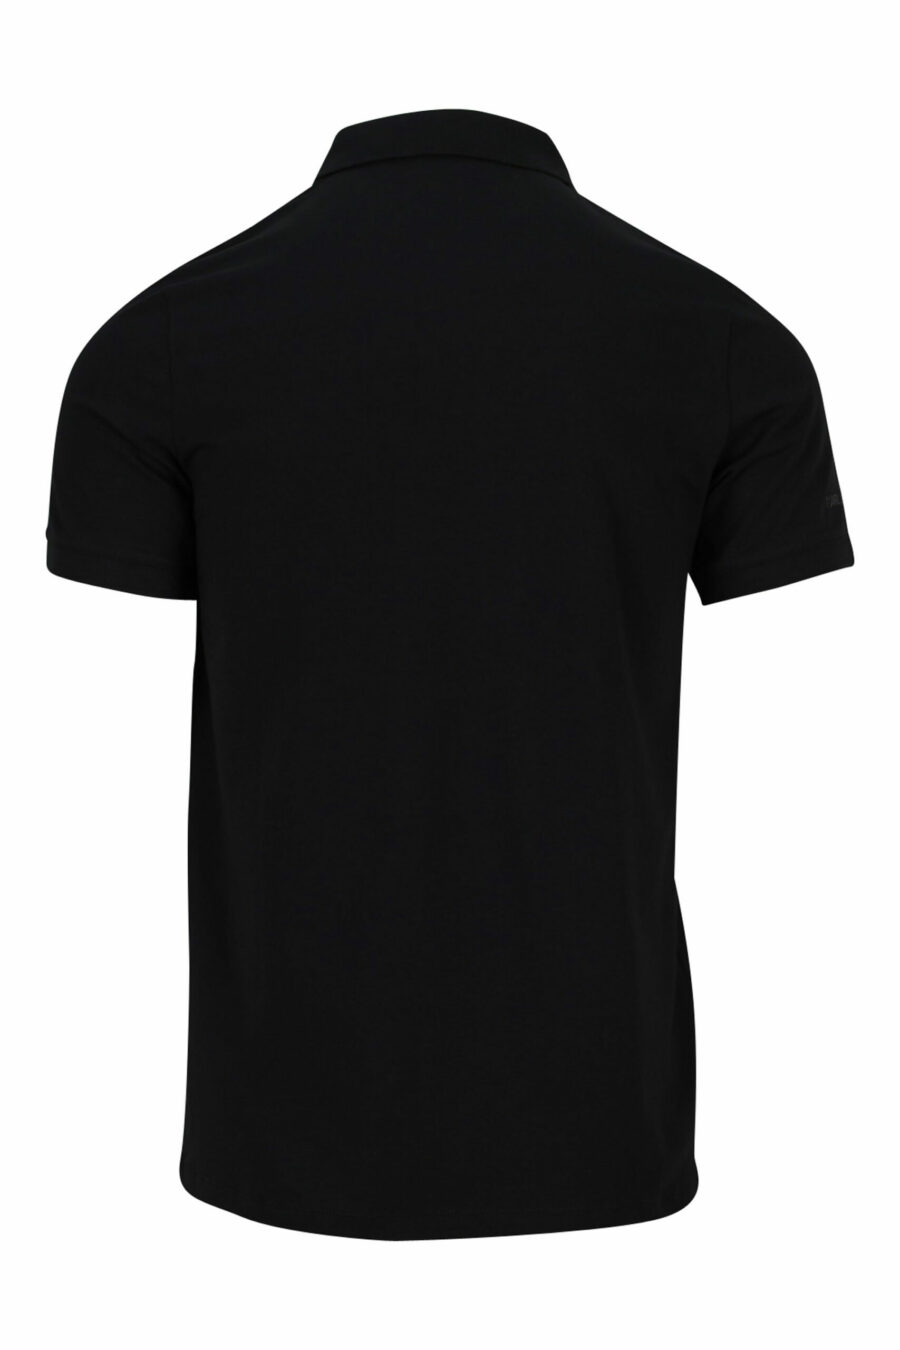 Black polo shirt with monochrome mini-logo - 4062226398633 1 scaled